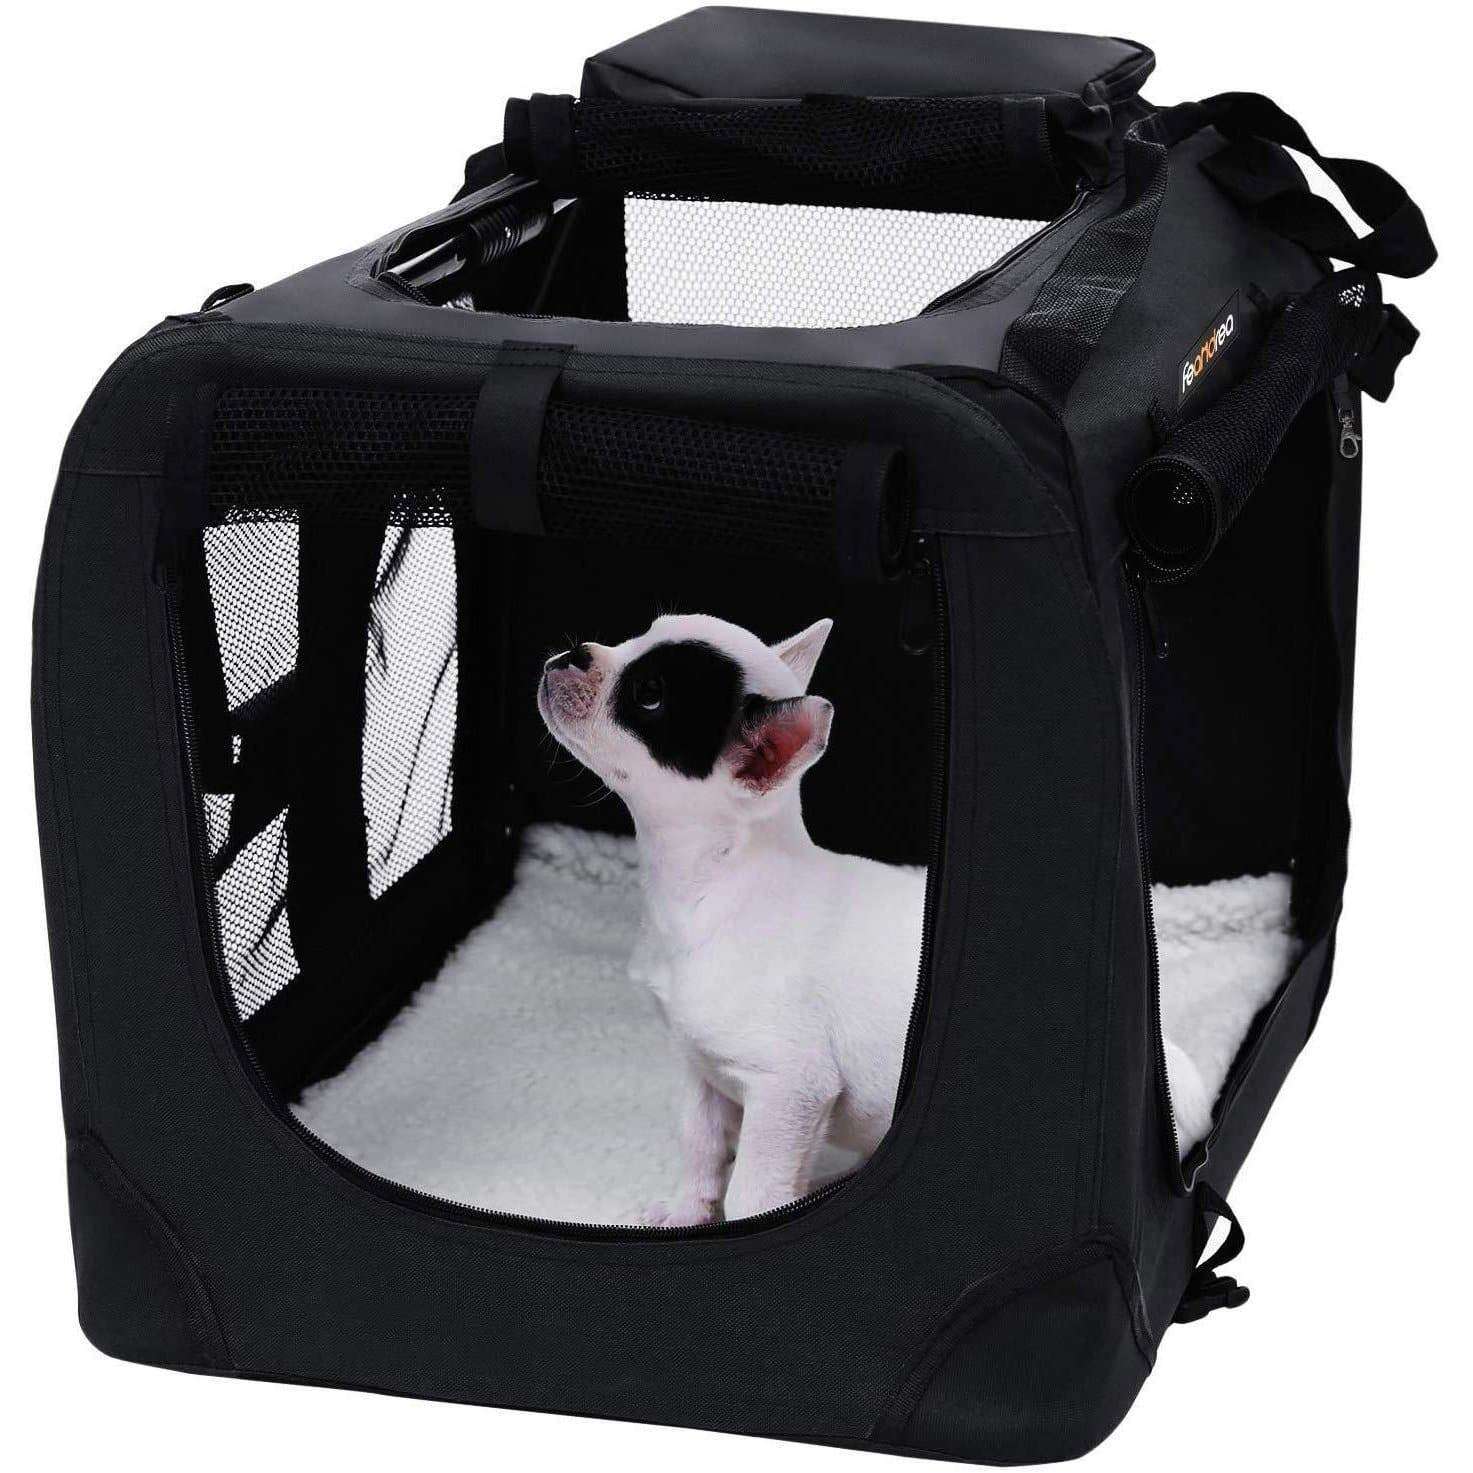 Nancy's Transportbox - Hondenbox - Transporttas - Opvouwbare Kattenbox - Zwart